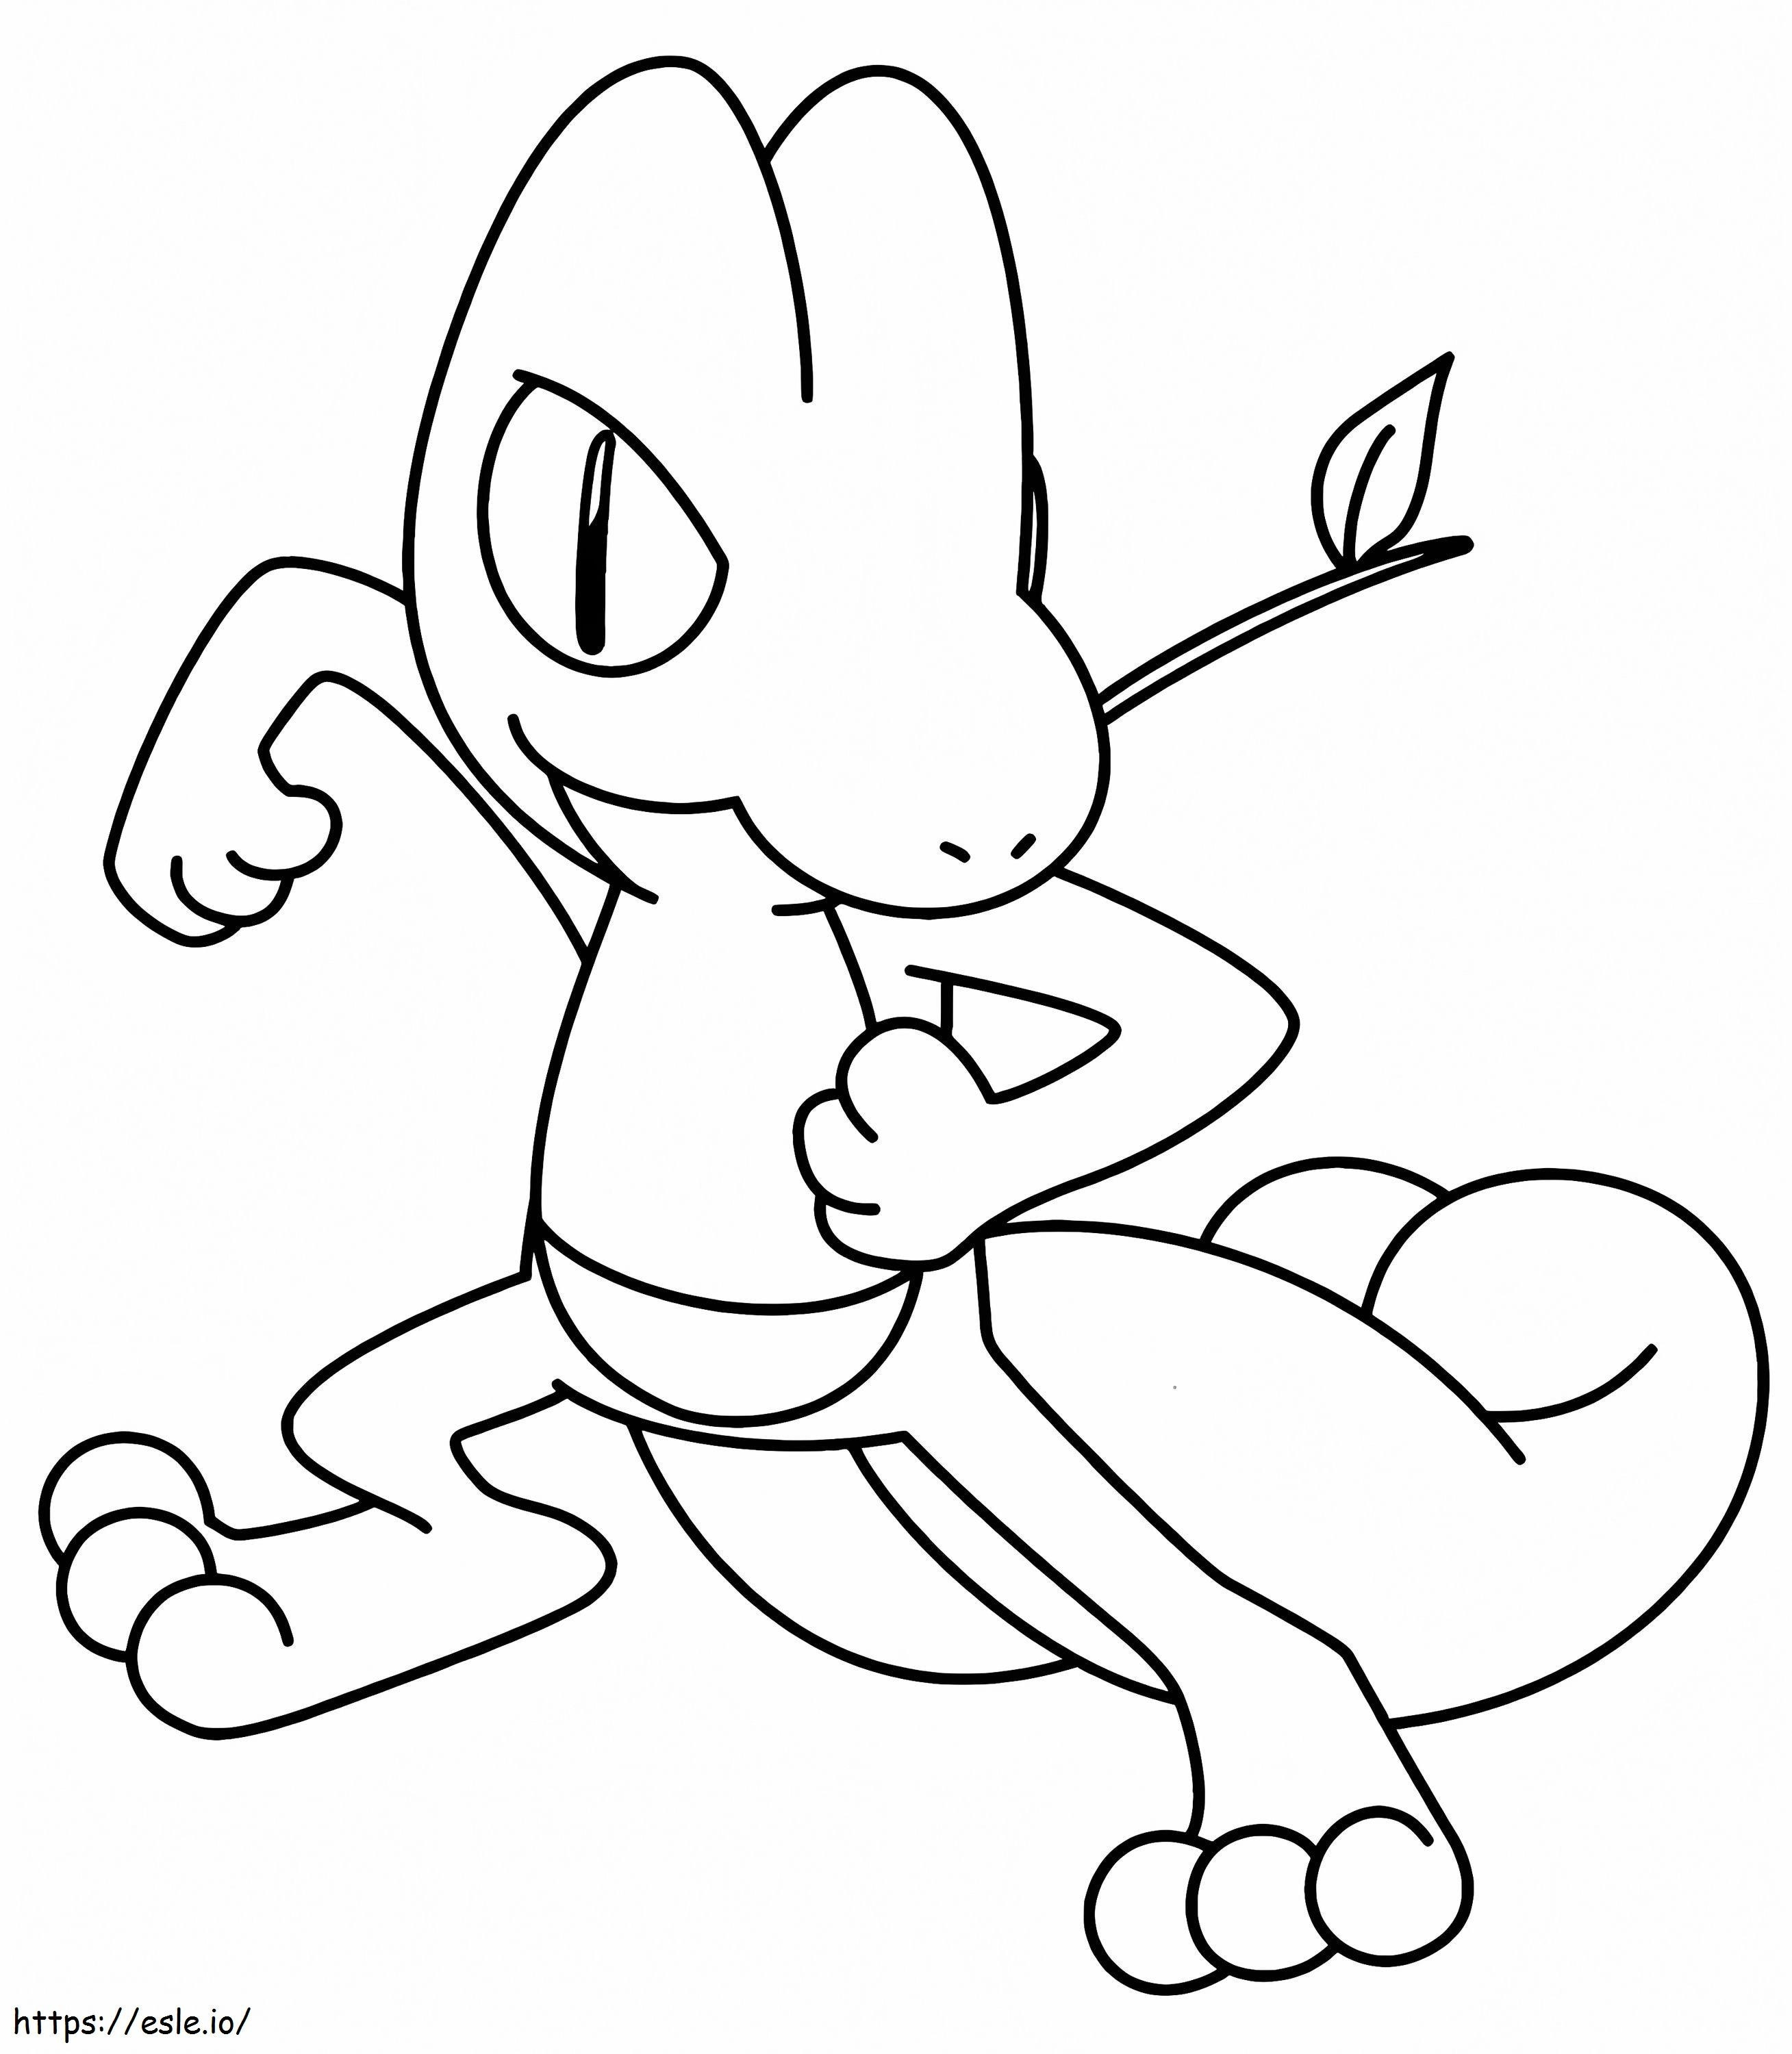 Cool Treecko Pokemon coloring page